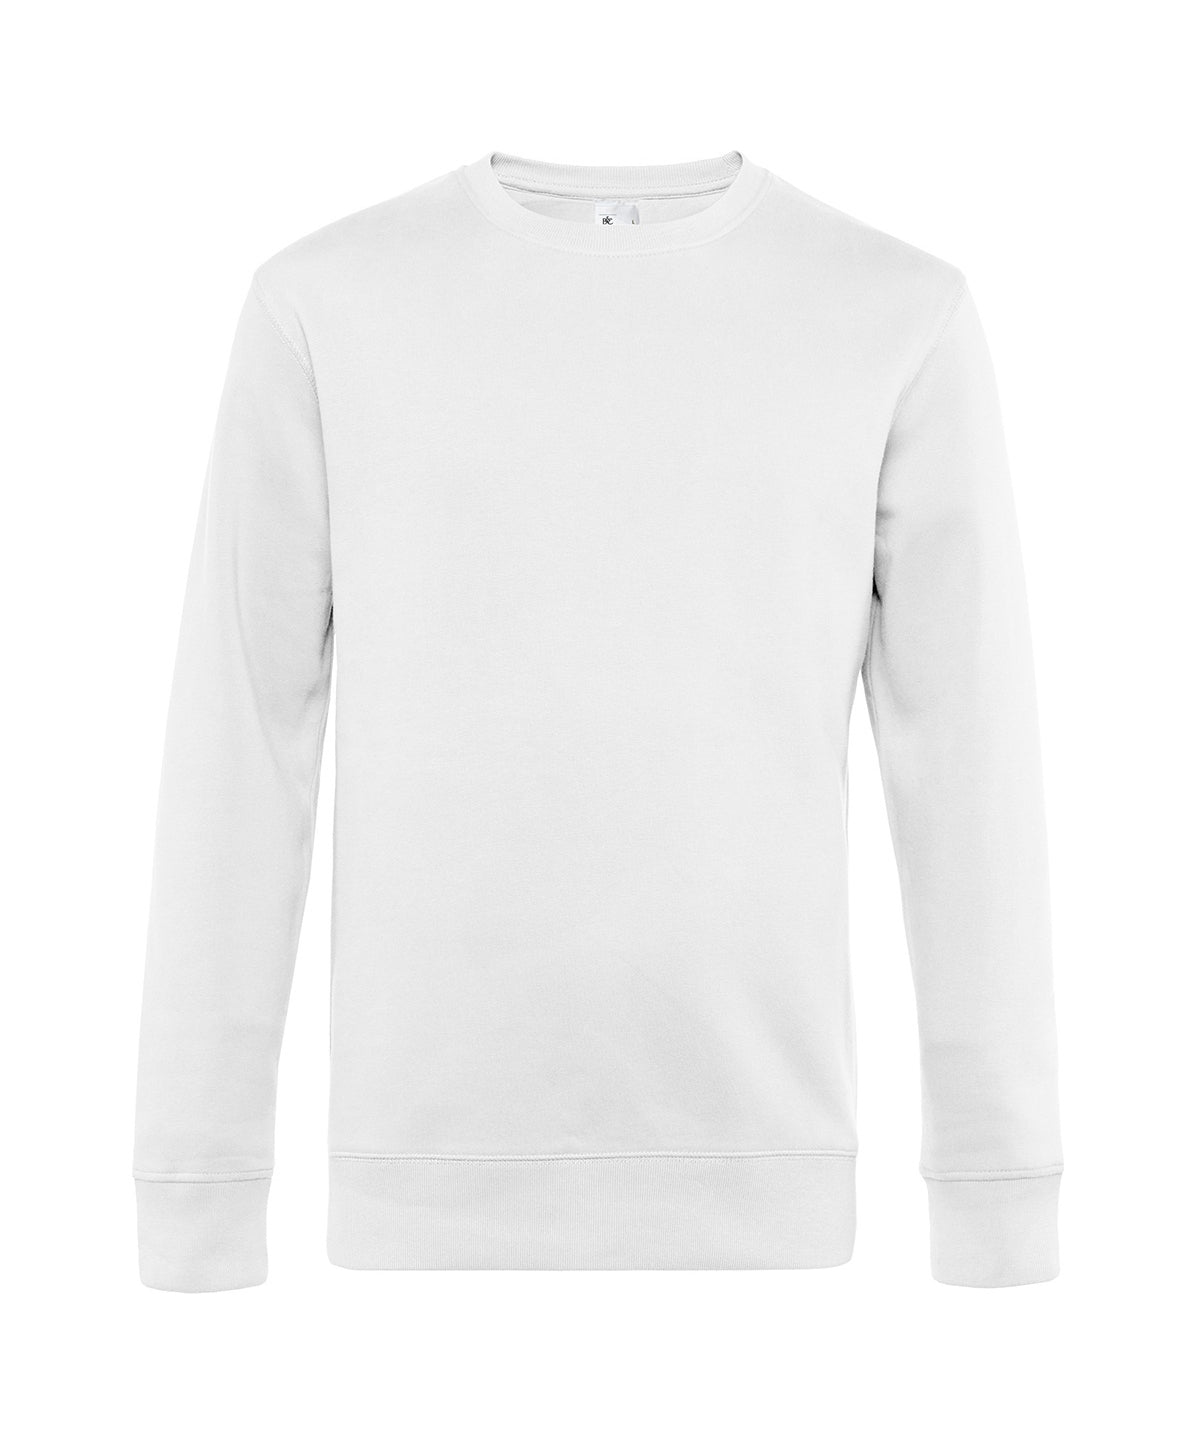 Personalised Sweatshirts - Dark Grey B&C Collection B&C KING Crew Neck